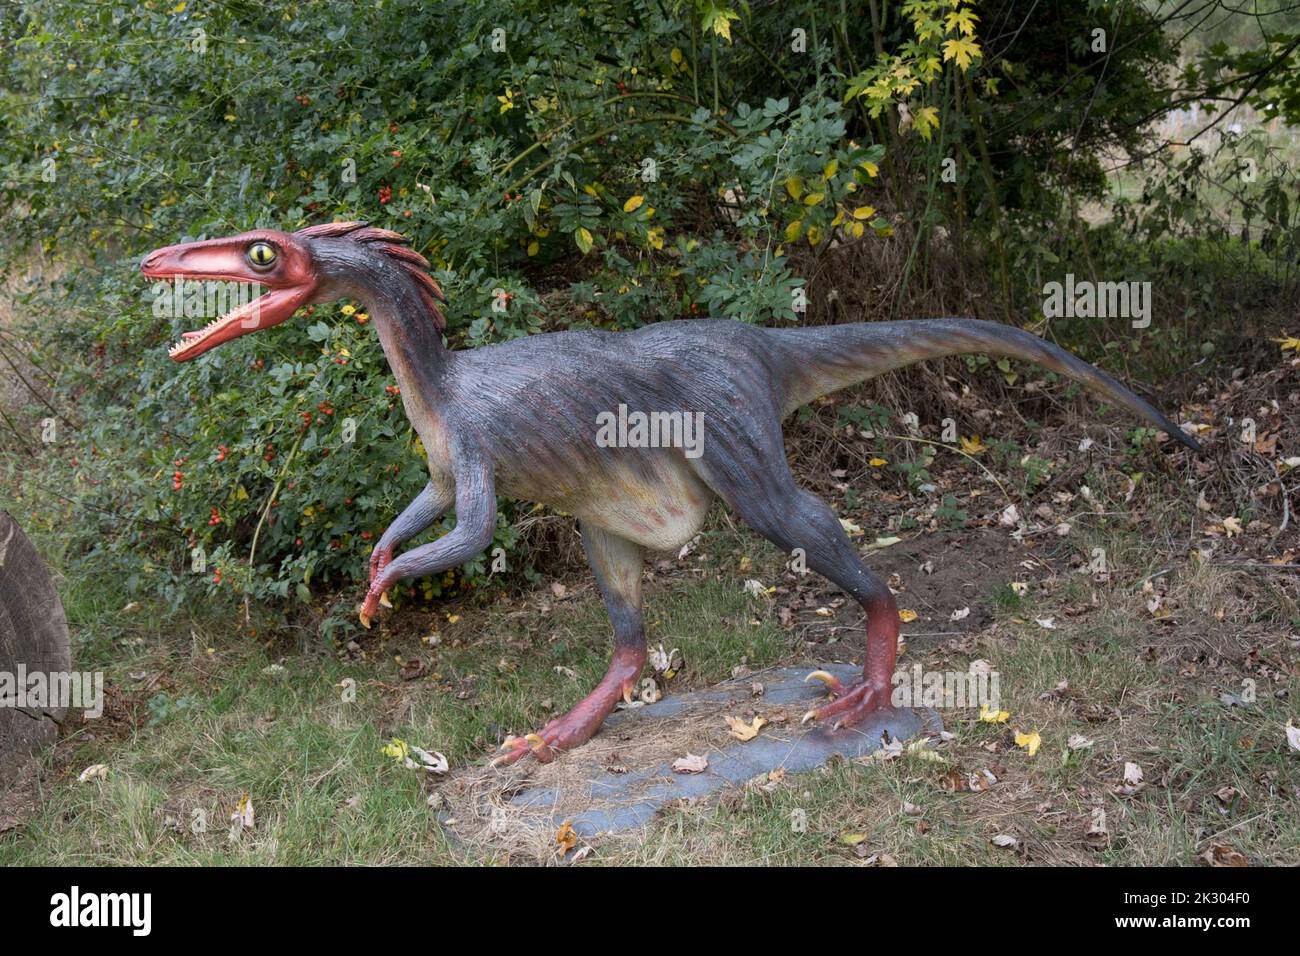 Modello LifeSize di Trodon un dinosauro teropodico birdlike del tardo Cretaceo, All Things Wild, Honeybourne, UK Foto Stock